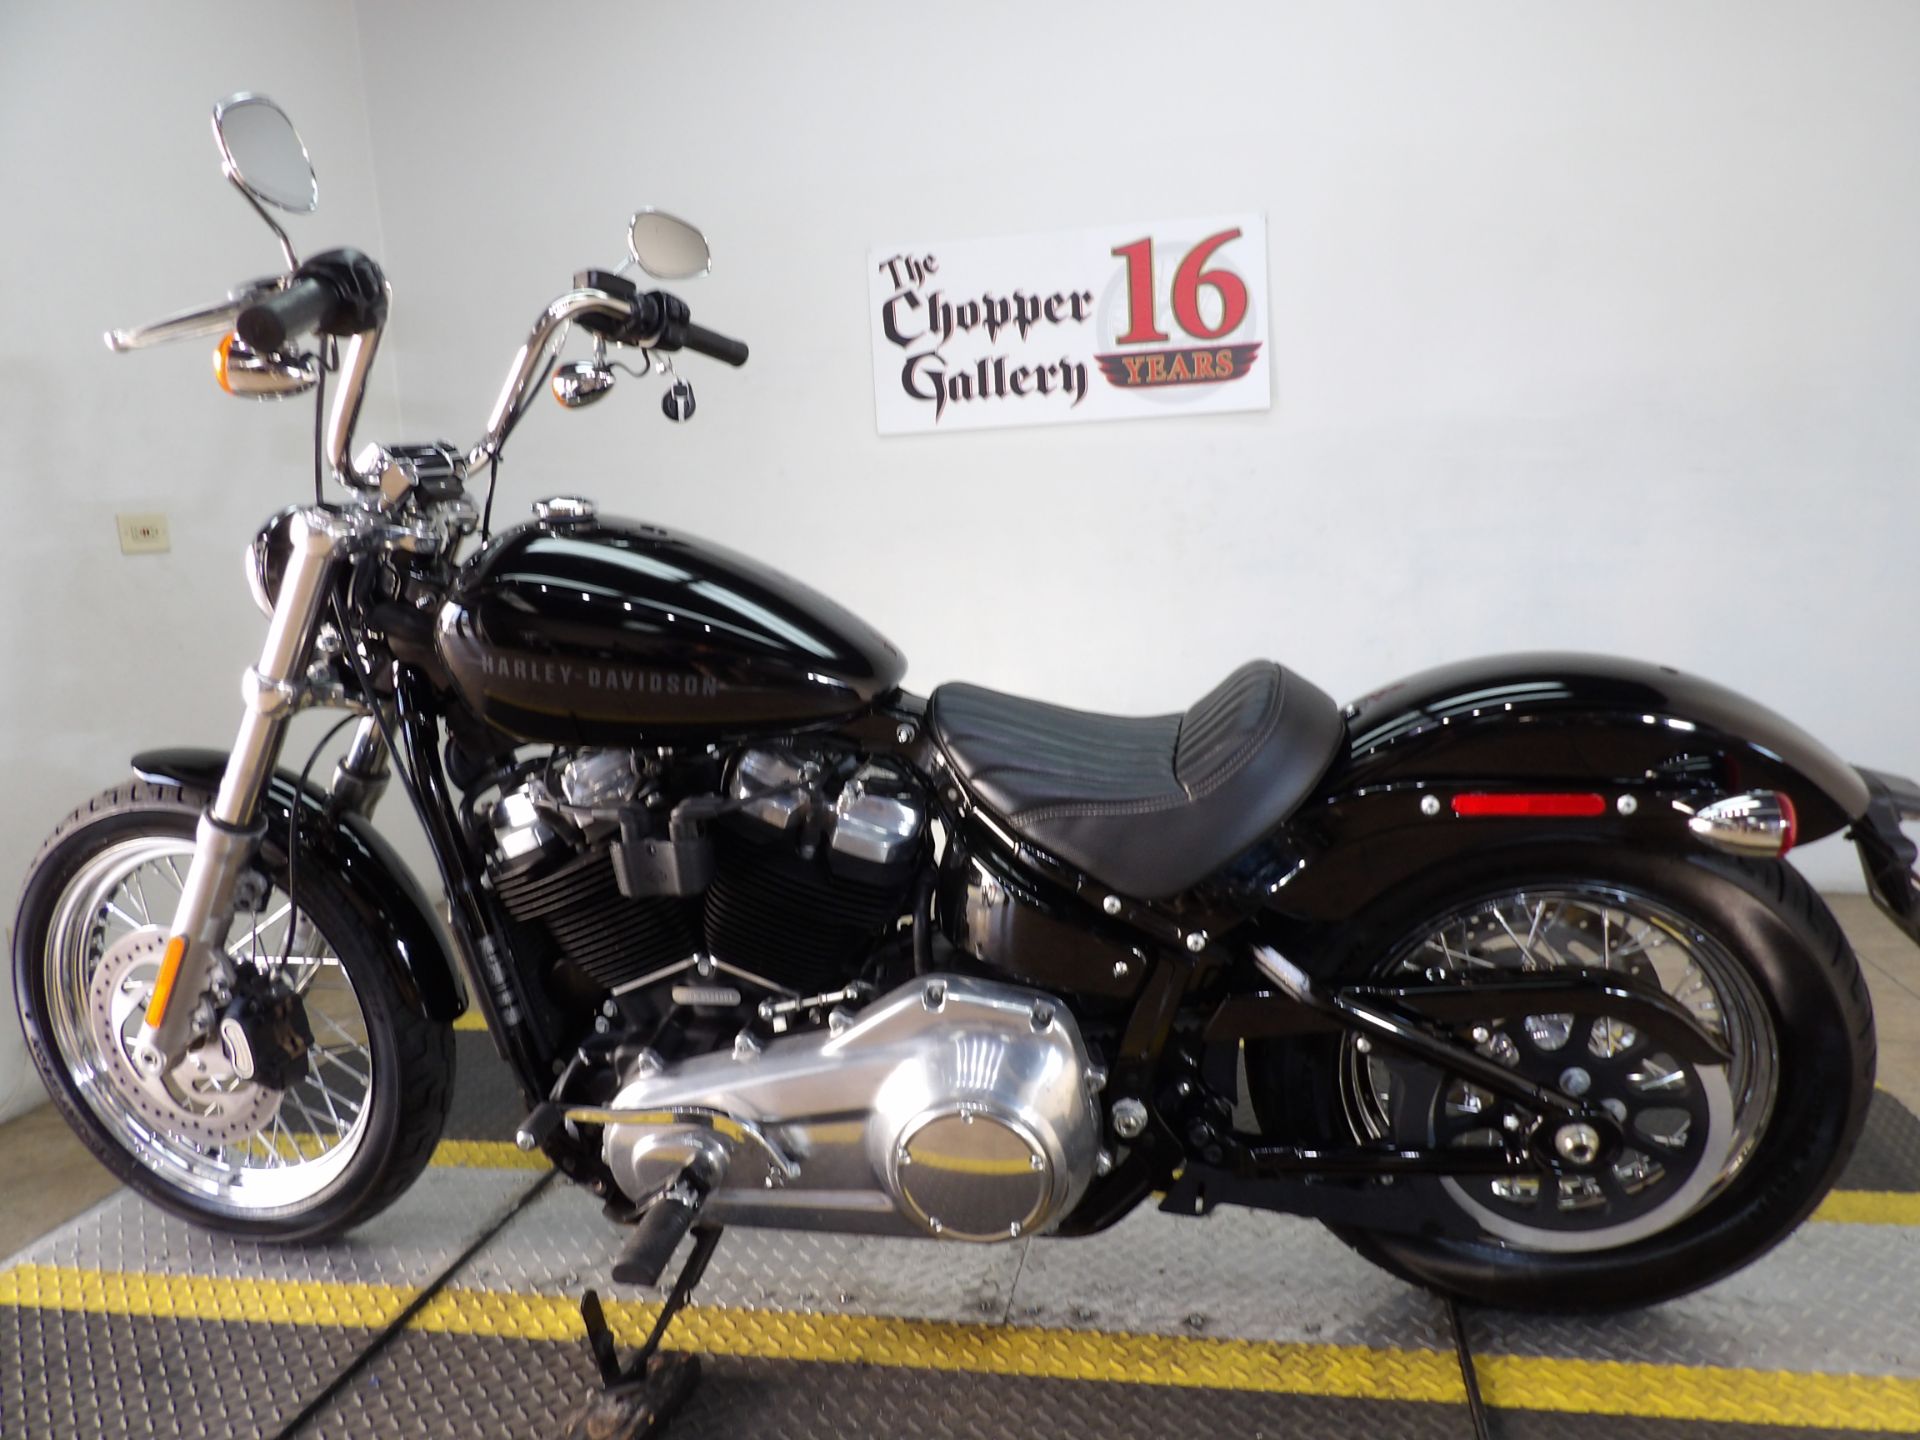 2020 Harley-Davidson Softail® Standard in Temecula, California - Photo 10